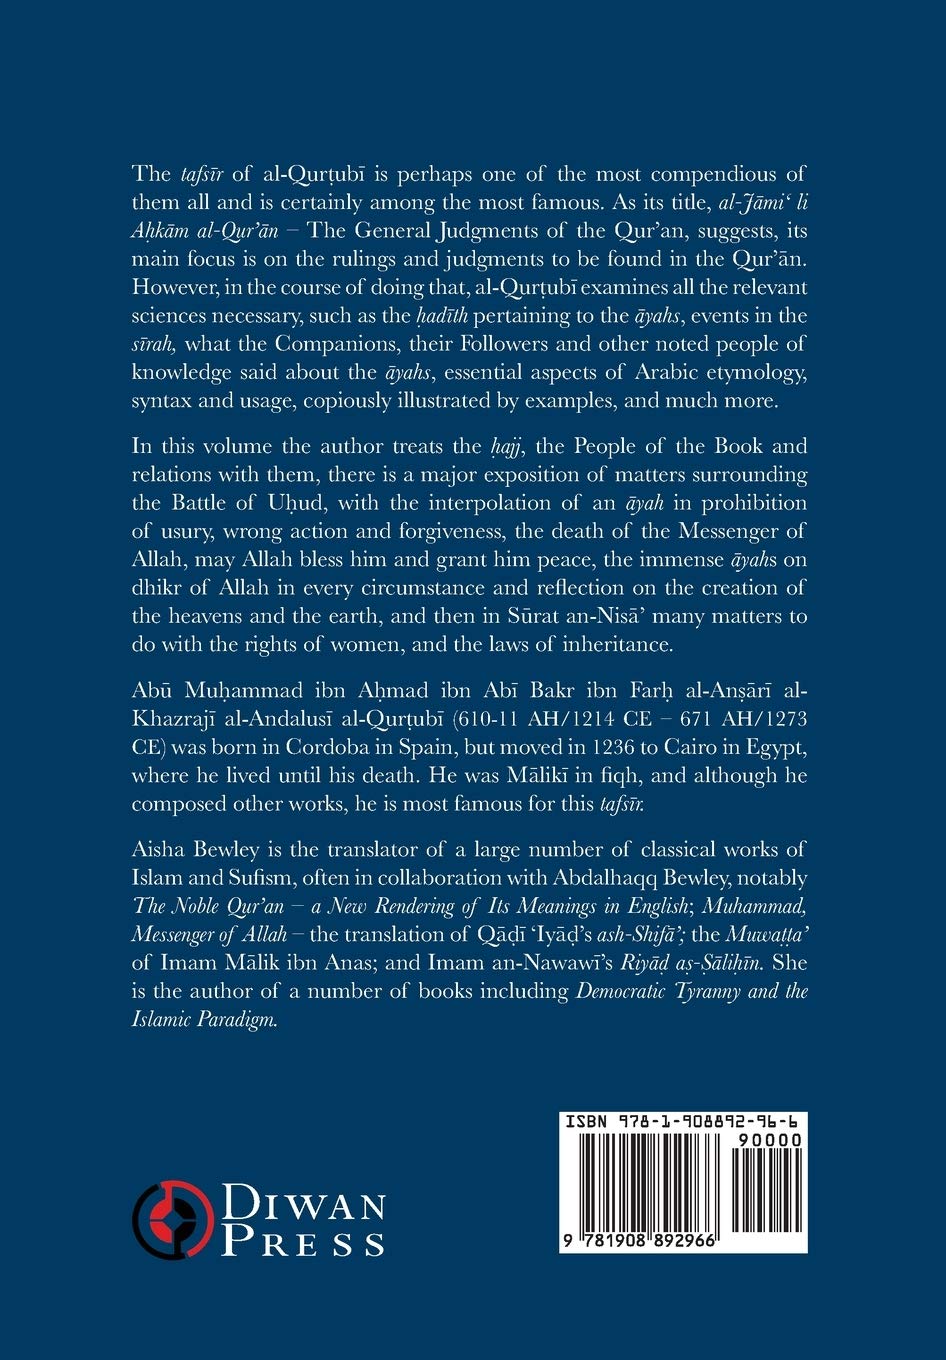 Tafsir al-Qurtubi Vol. 4: Juz' 4: Sūrah Āli 'Imrān 96 - Sūrat an-Nisā' 1 - 23 - Abu 'Abdullah Muhammad Al-Qurtubi (Author), Abdalhaqq Bewley (Editor), Aisha Abdurrahman Bewley (Translator)